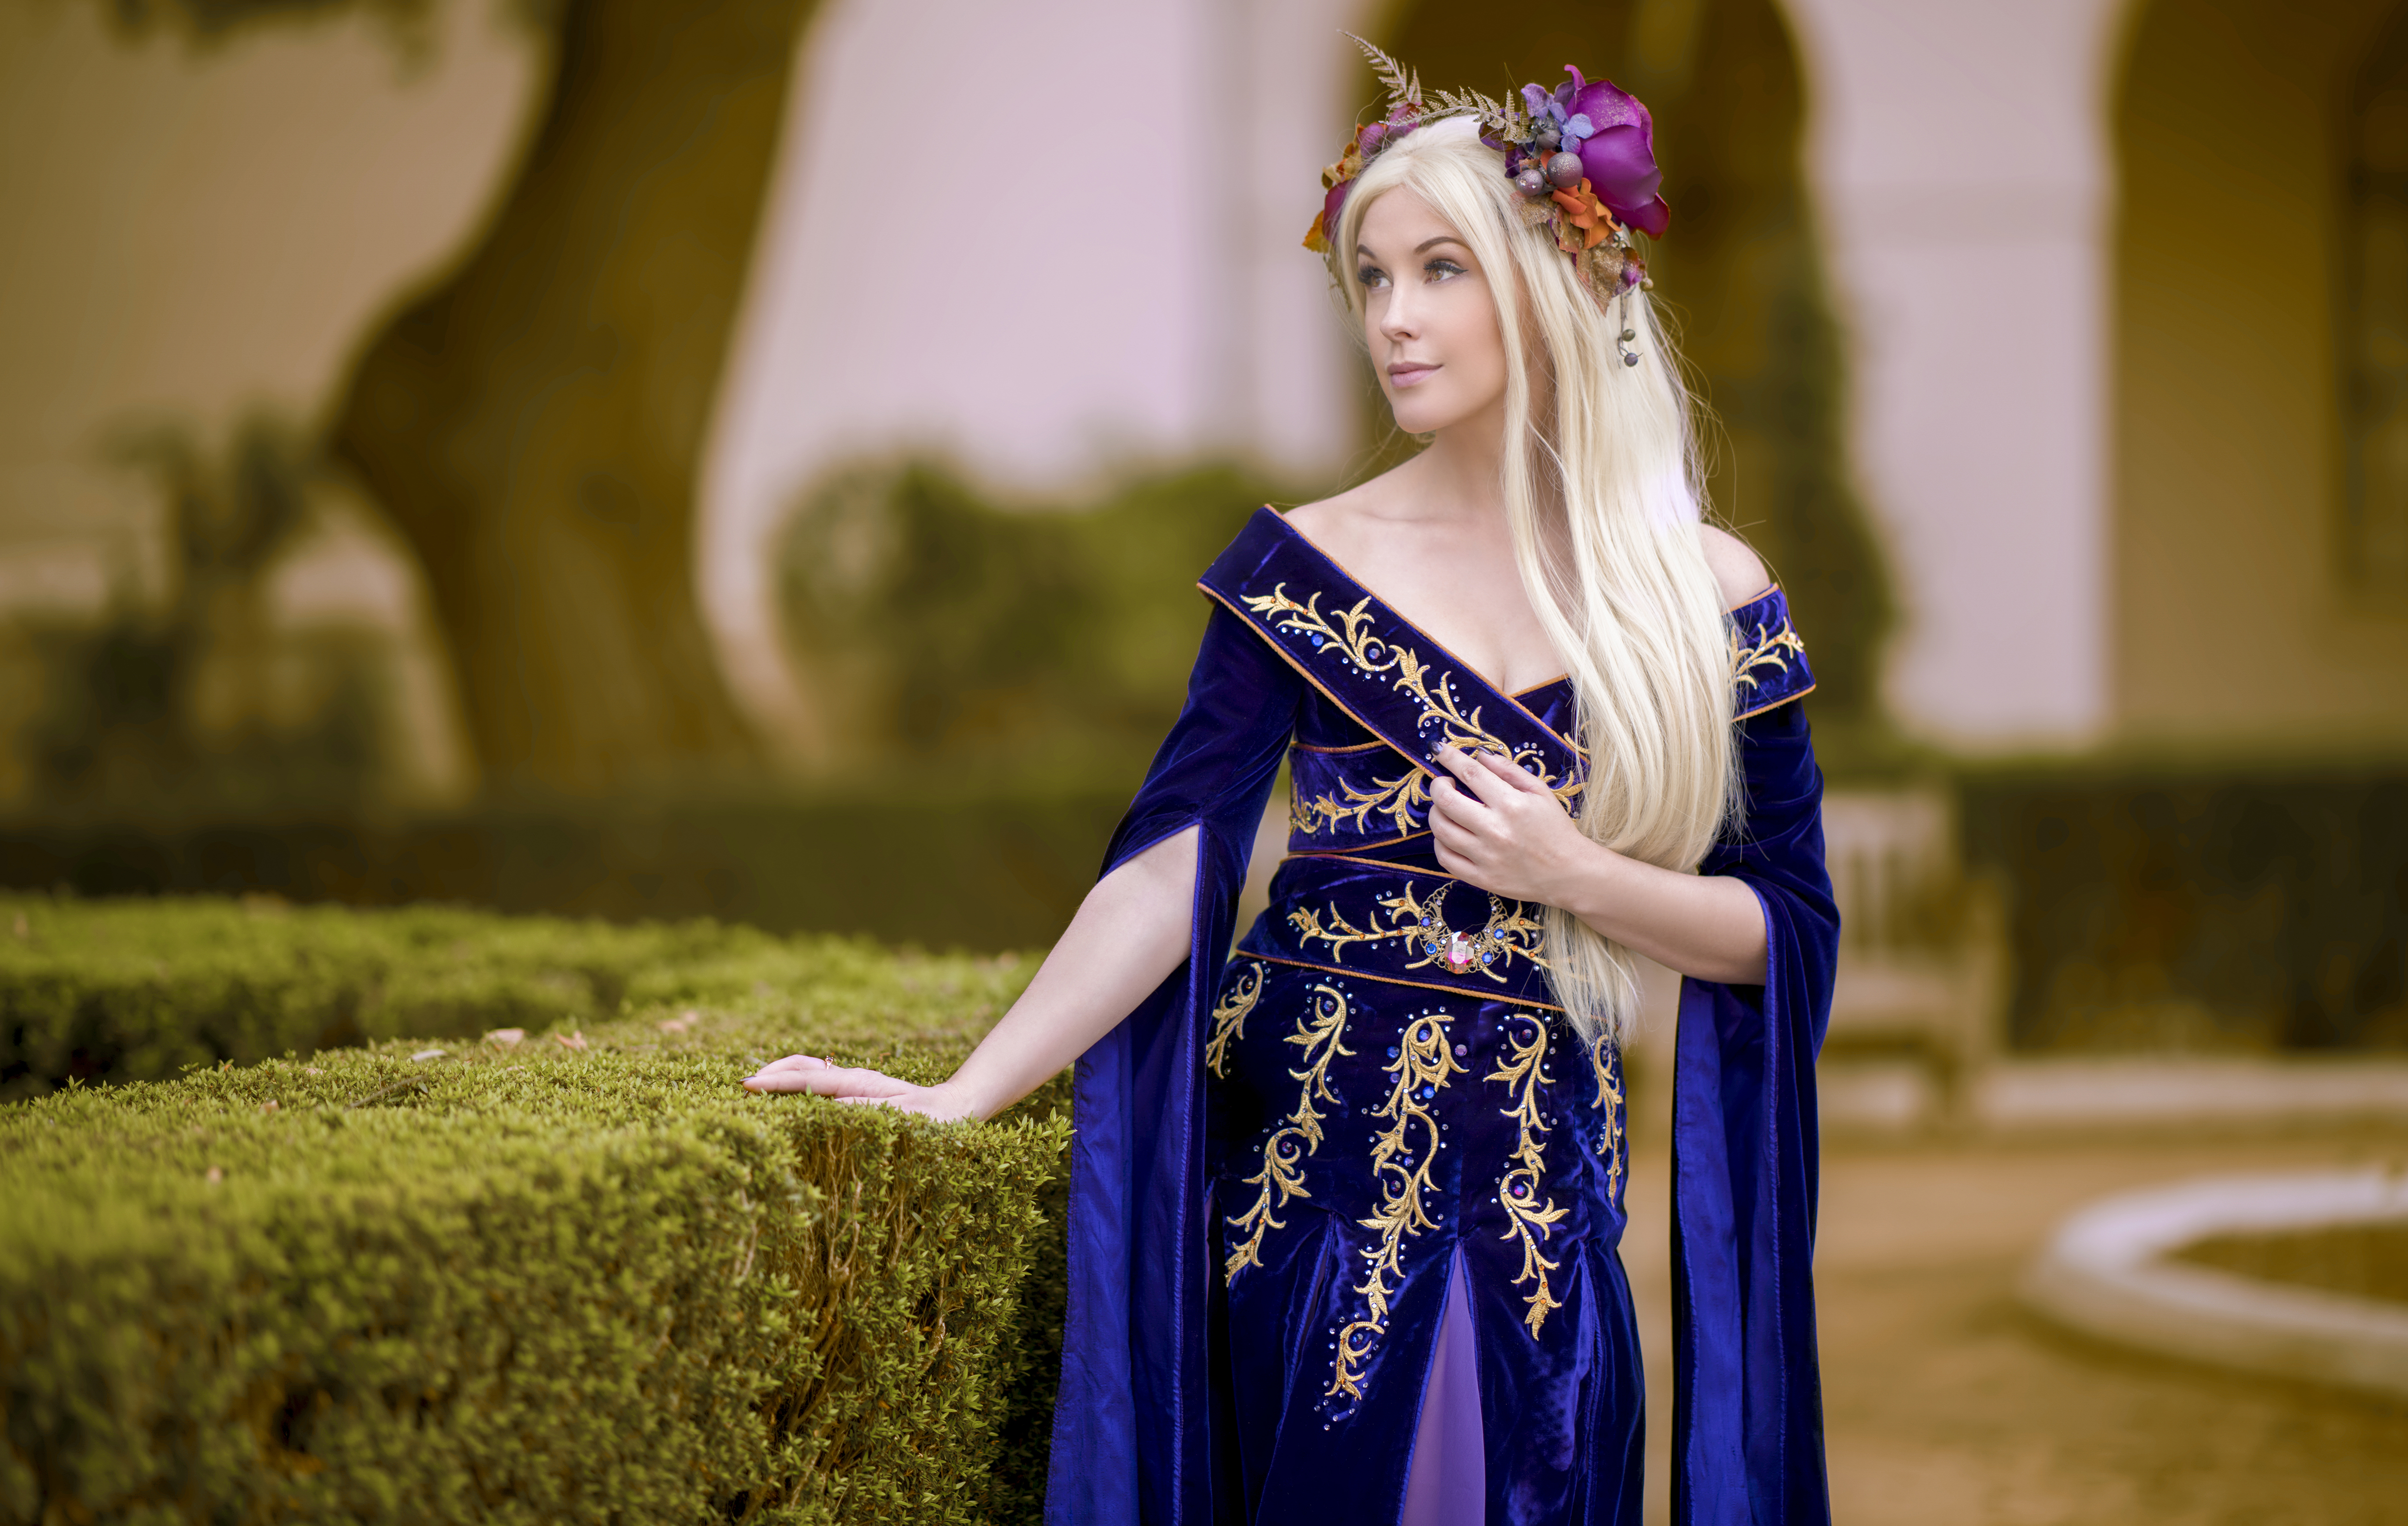 Fantasy Girl Purple Clothing Women Blonde Queen Royalty 4954x3139